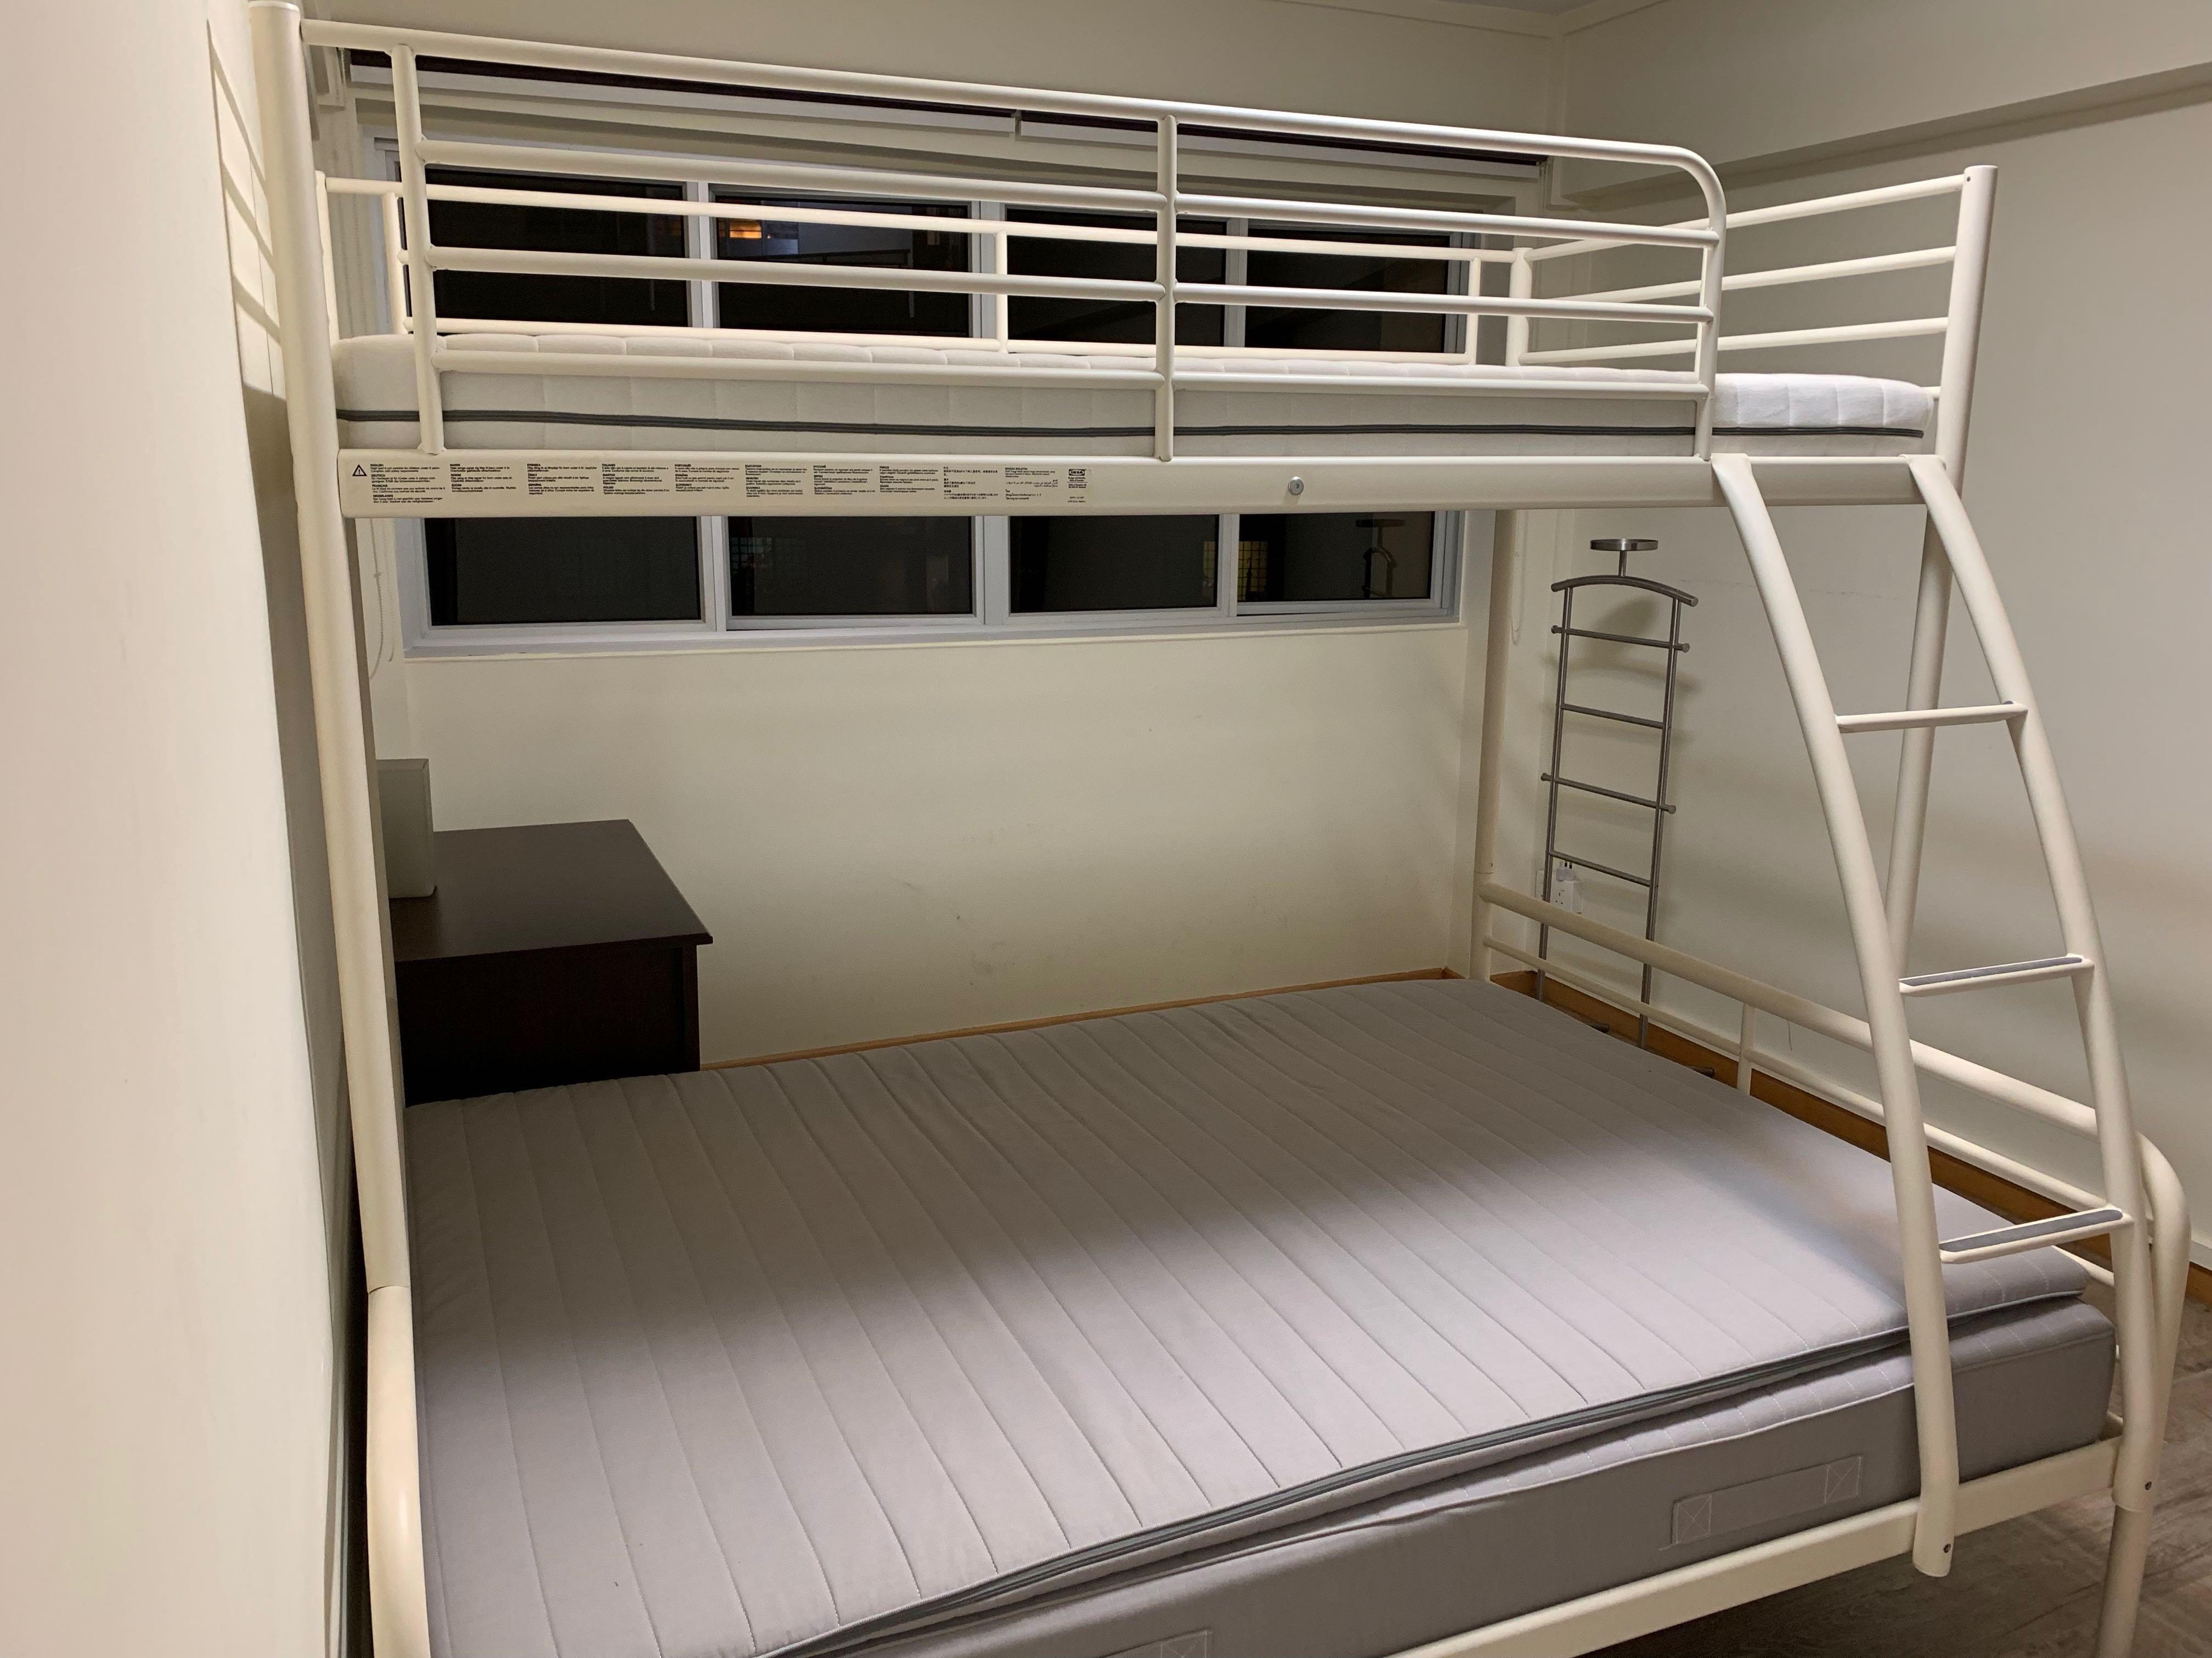 double bunk beds ikea